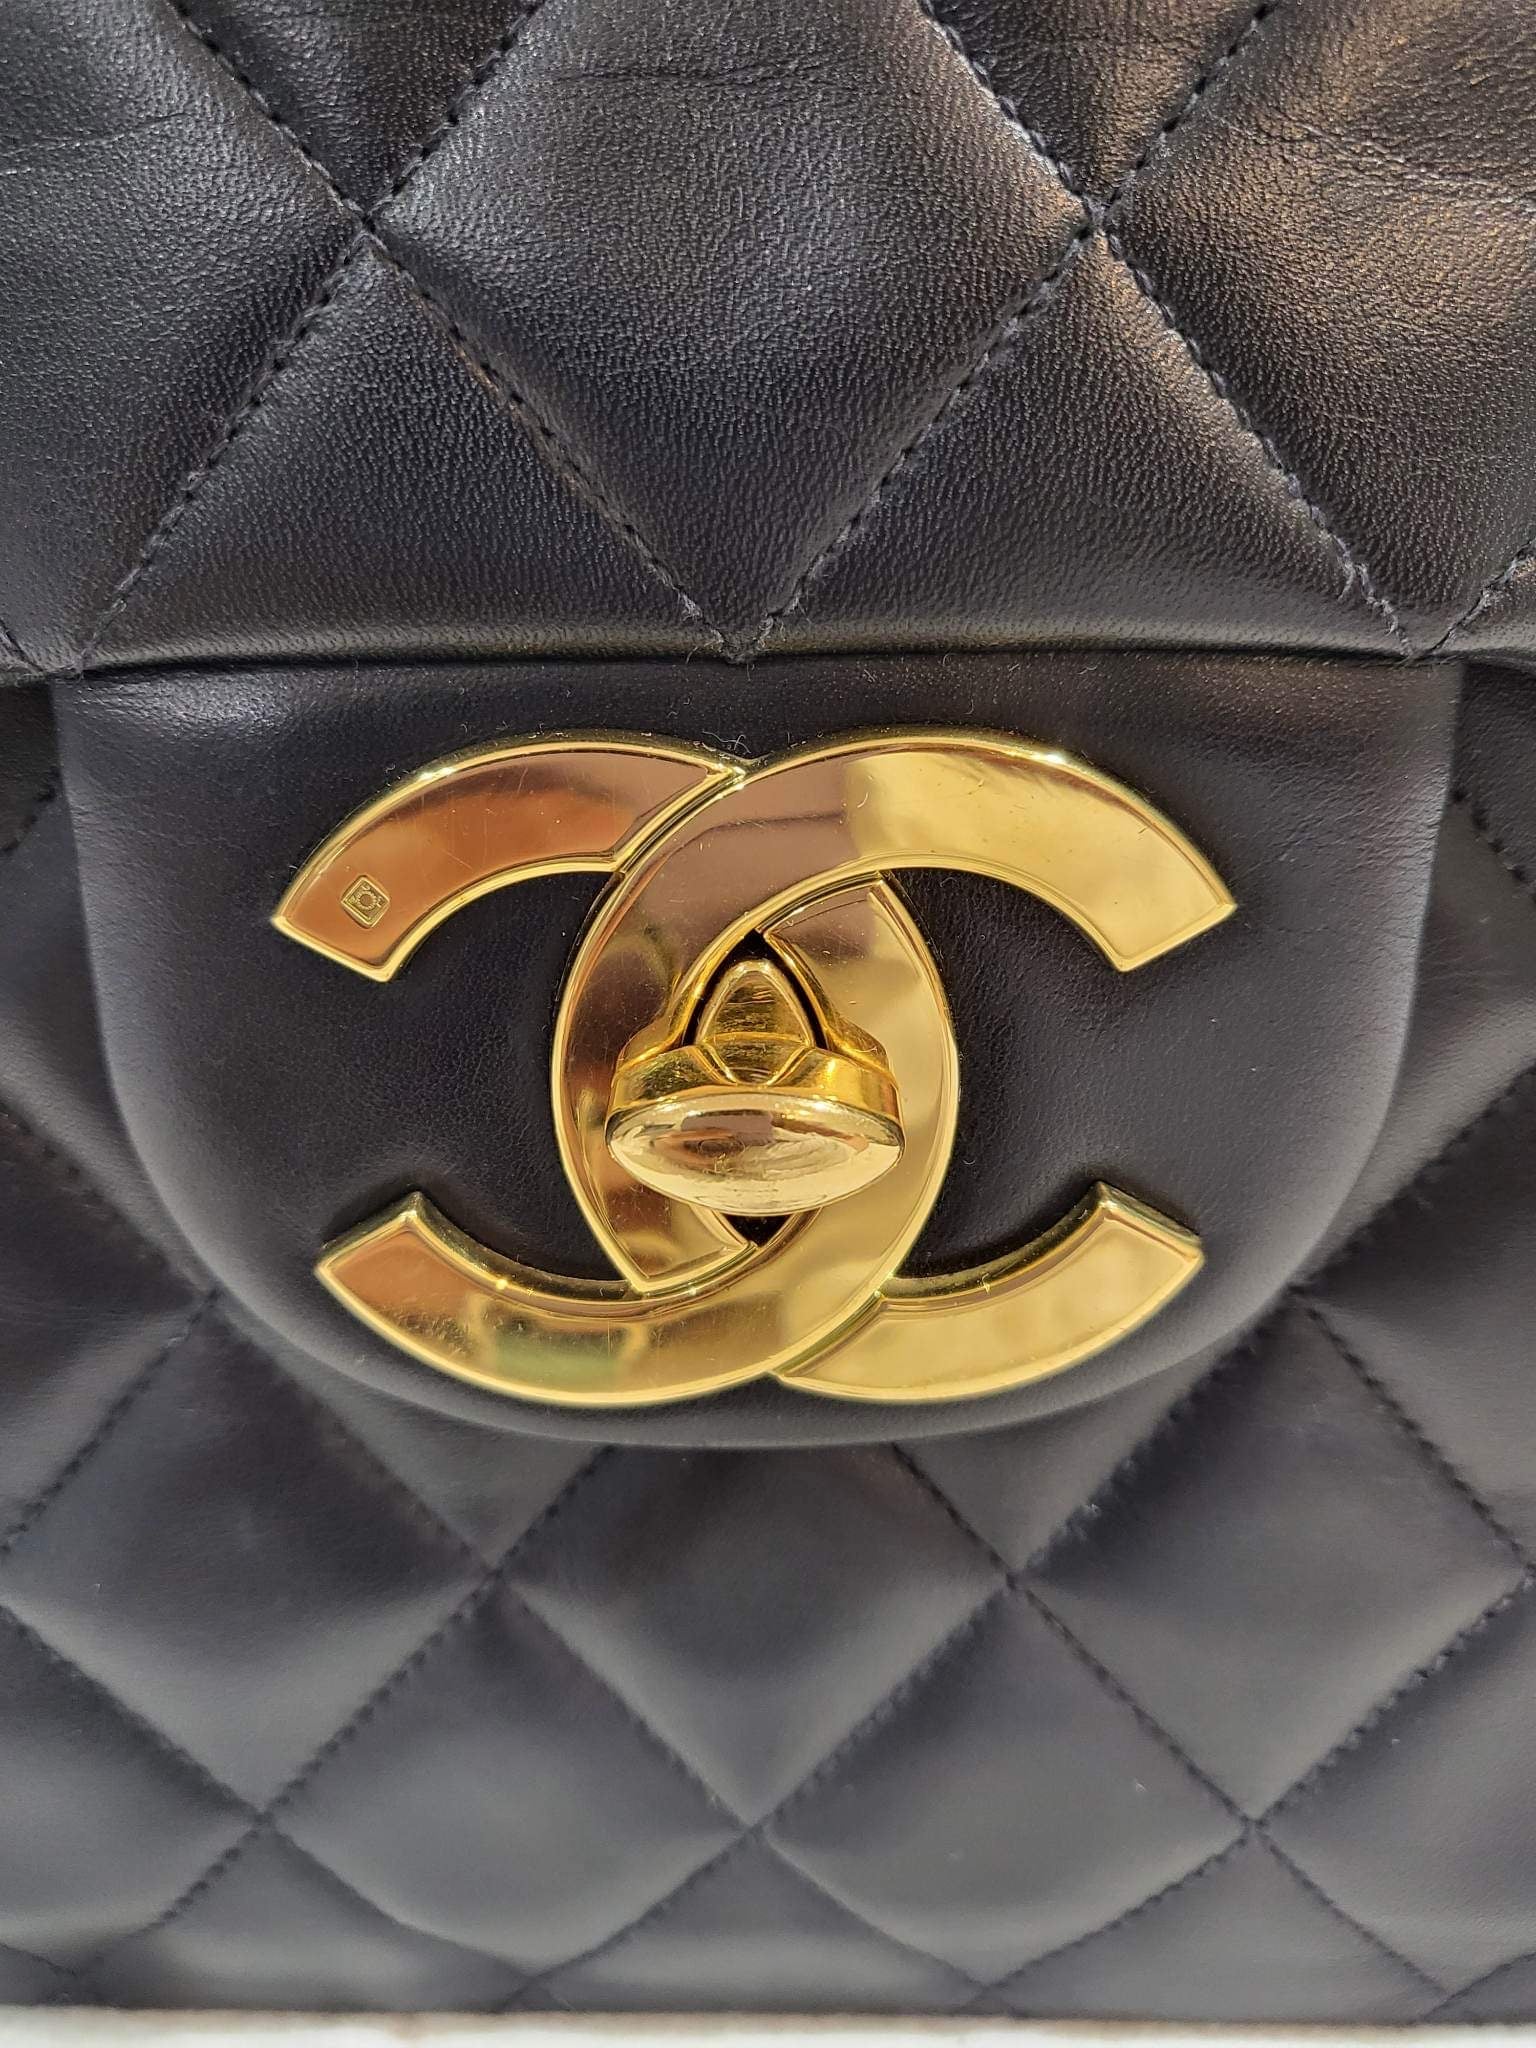 Chanel XL Flap Bag